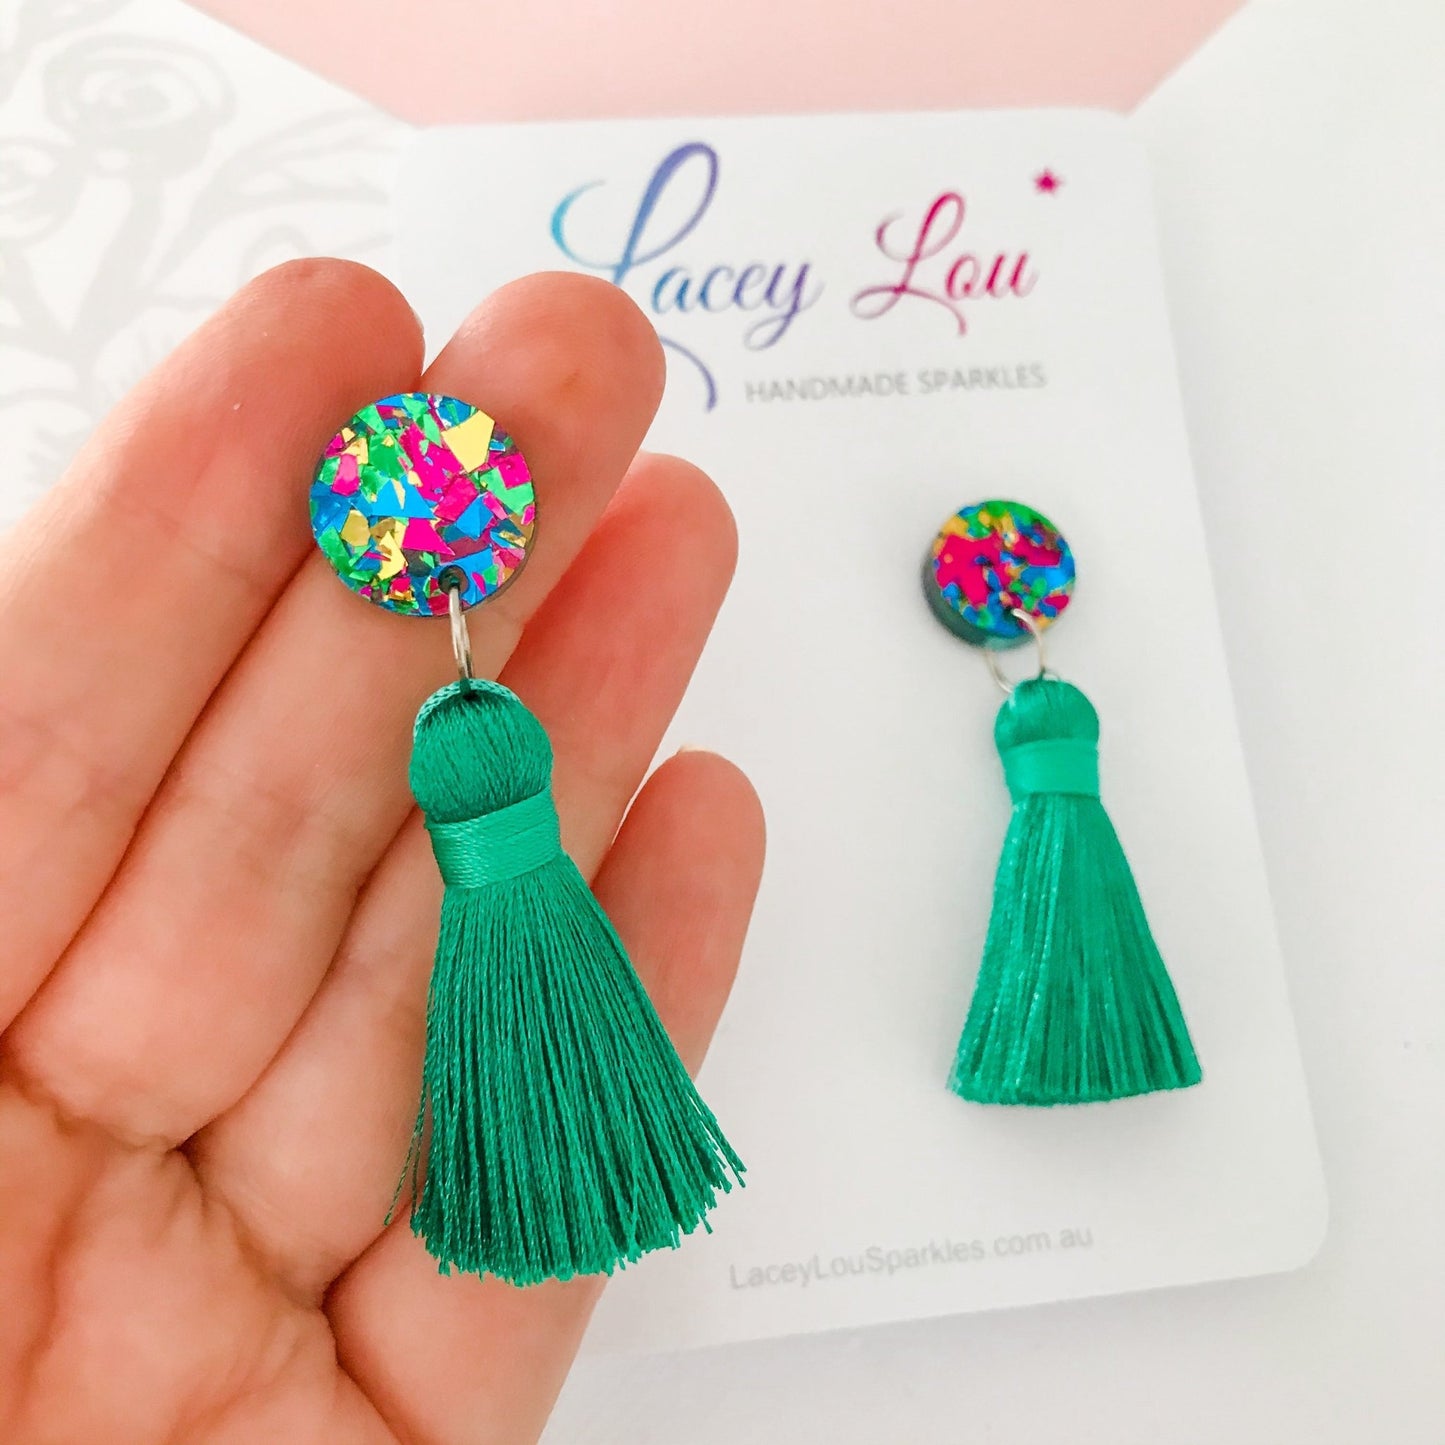 Large Silk Tassel Earrings - Teal Green - Lacey Lou Sparkles